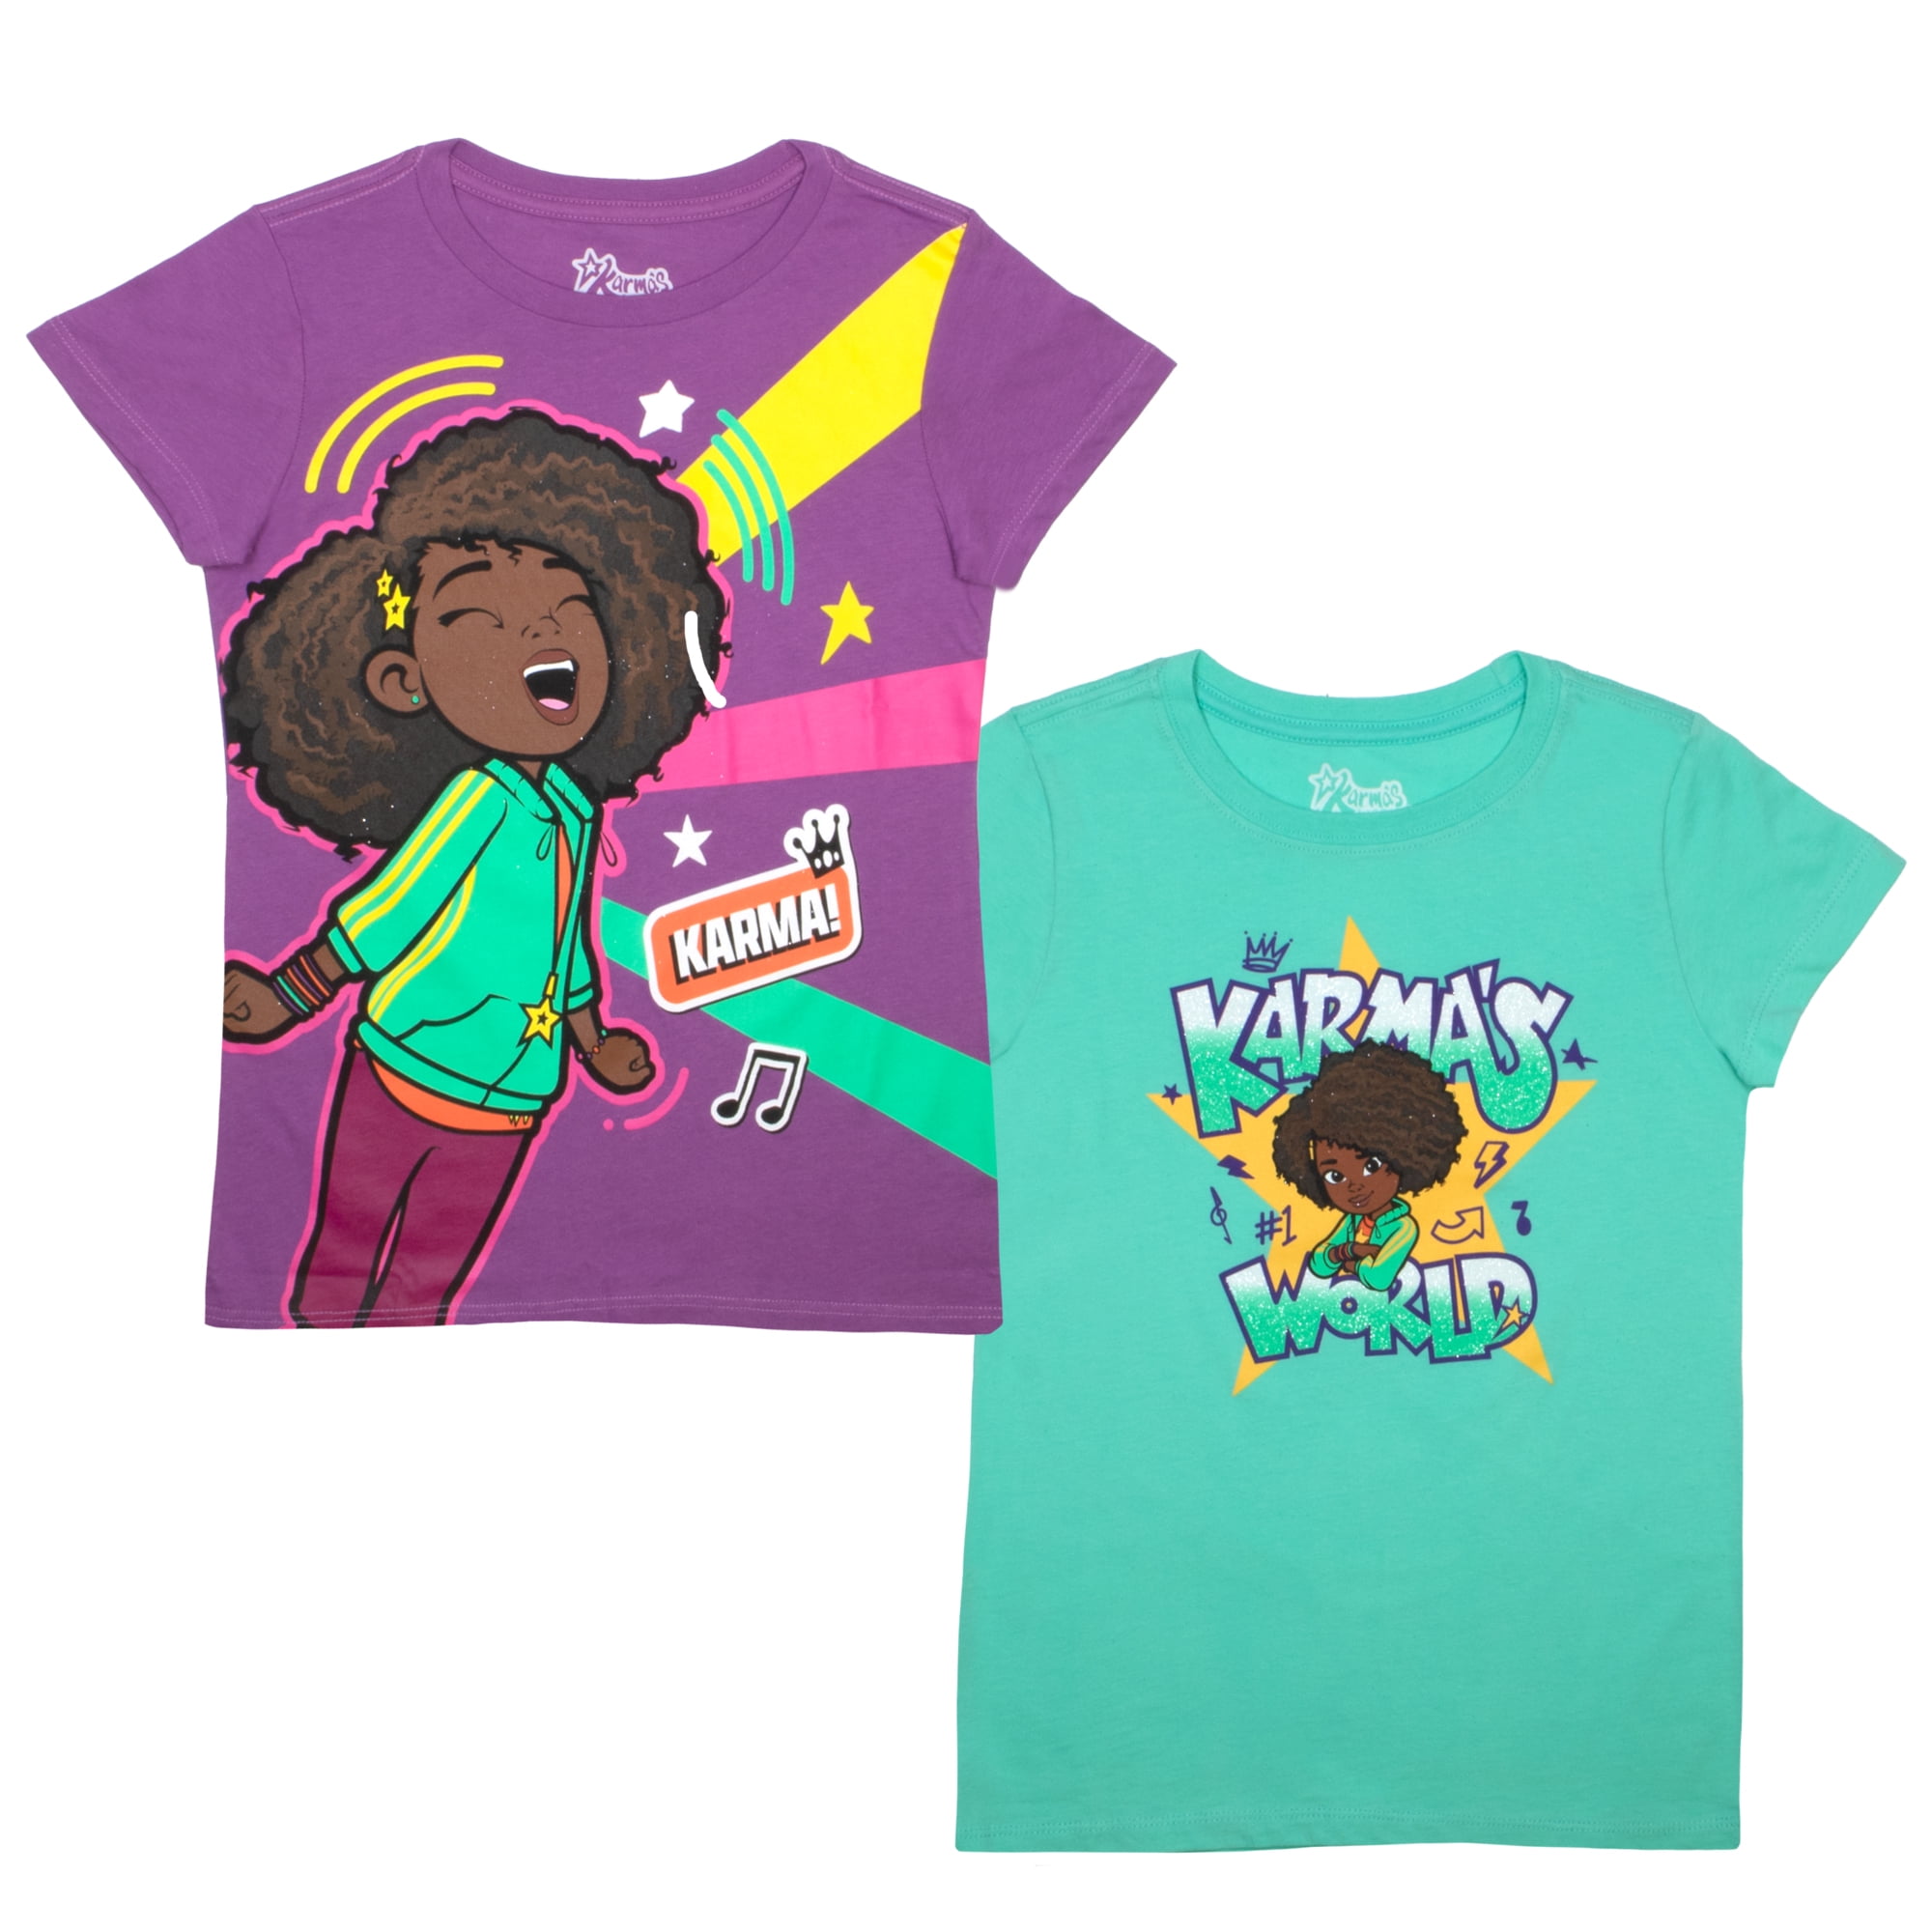 Karma's World Girls T-Shirts 2 Pack, Short Sleeve Tees 2 Pack for Girls  (Sizes 4-16)